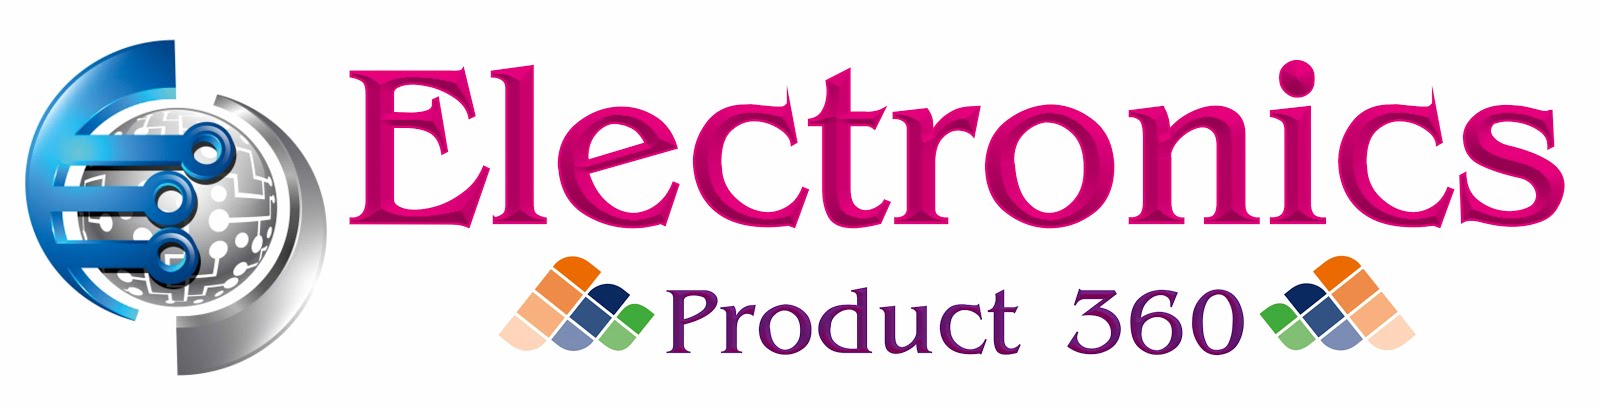 Electronic Product 360